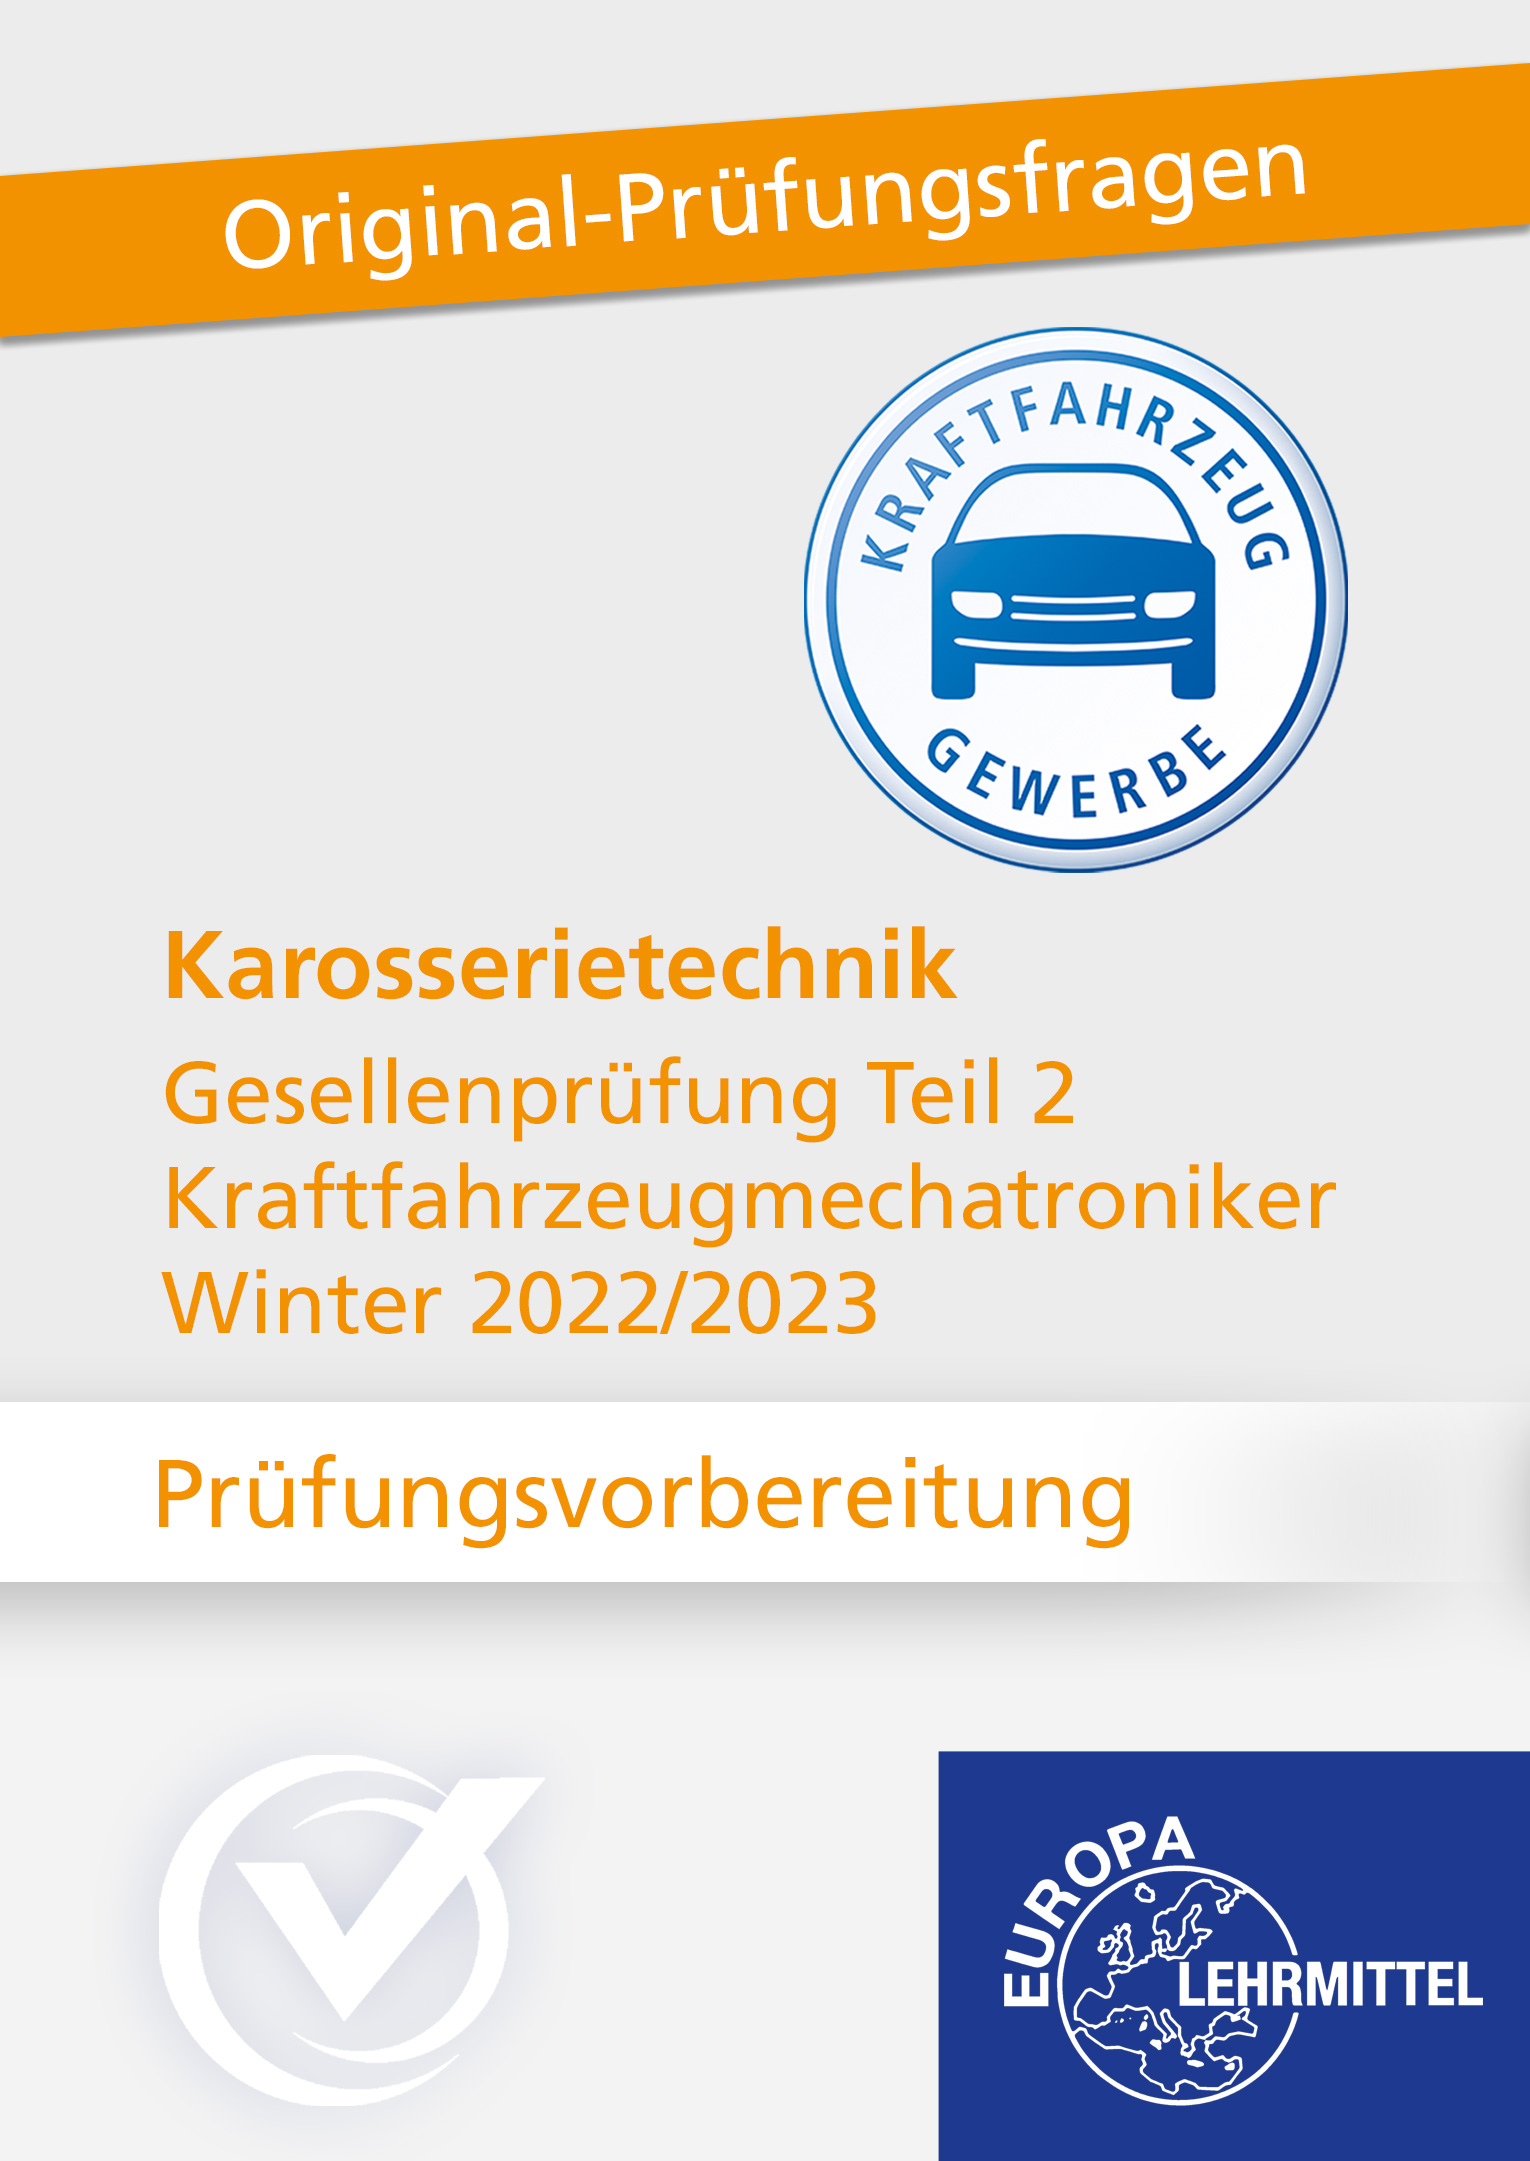 Prüfungsvorbereitung GP Teil 2 Karosserietechnik Winter 2022/2023 Online-Kurs